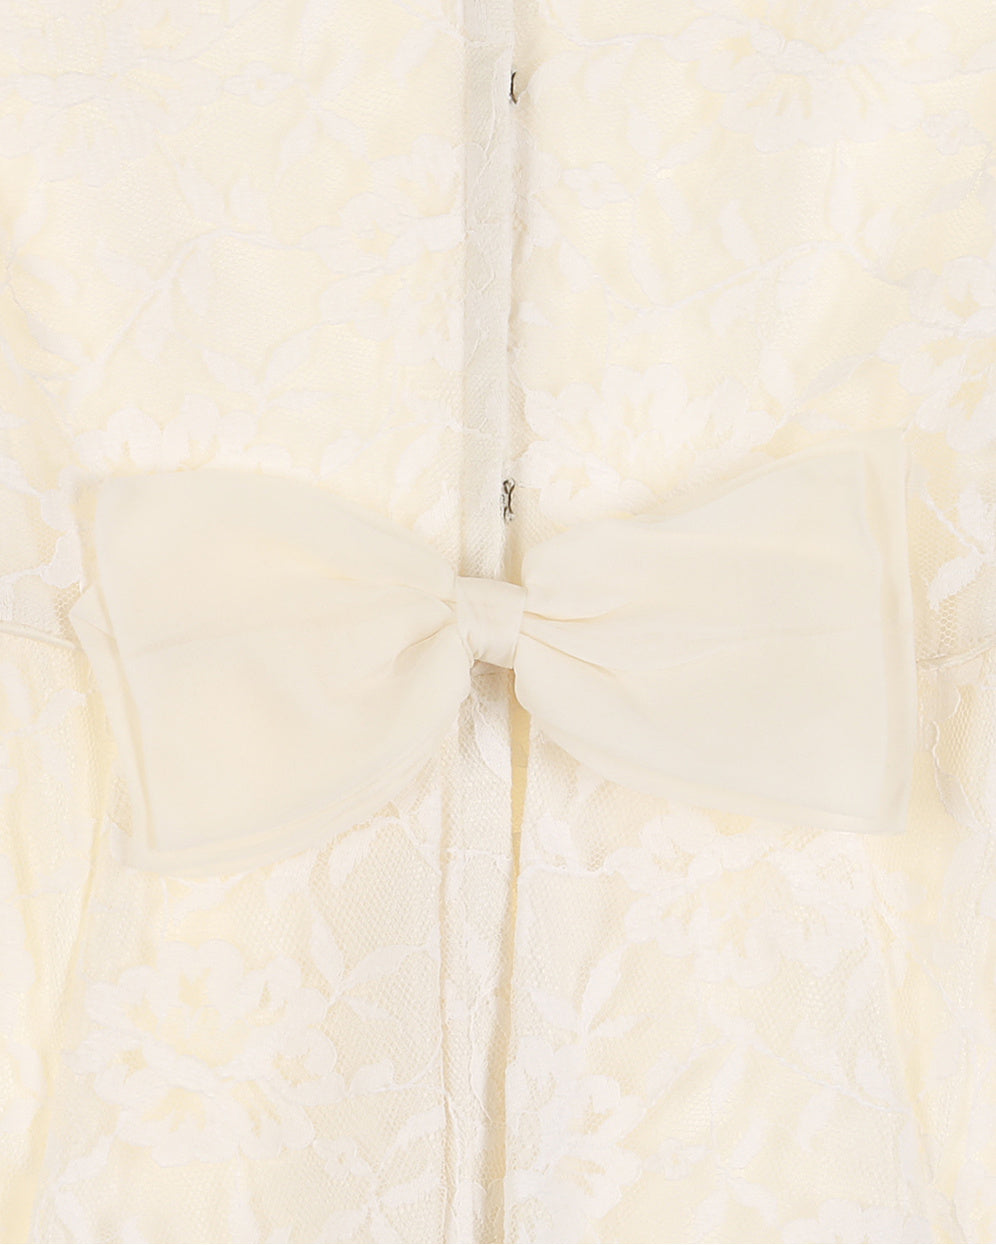 60s White Lace & Satin Boutique Bridal Dress - XXS